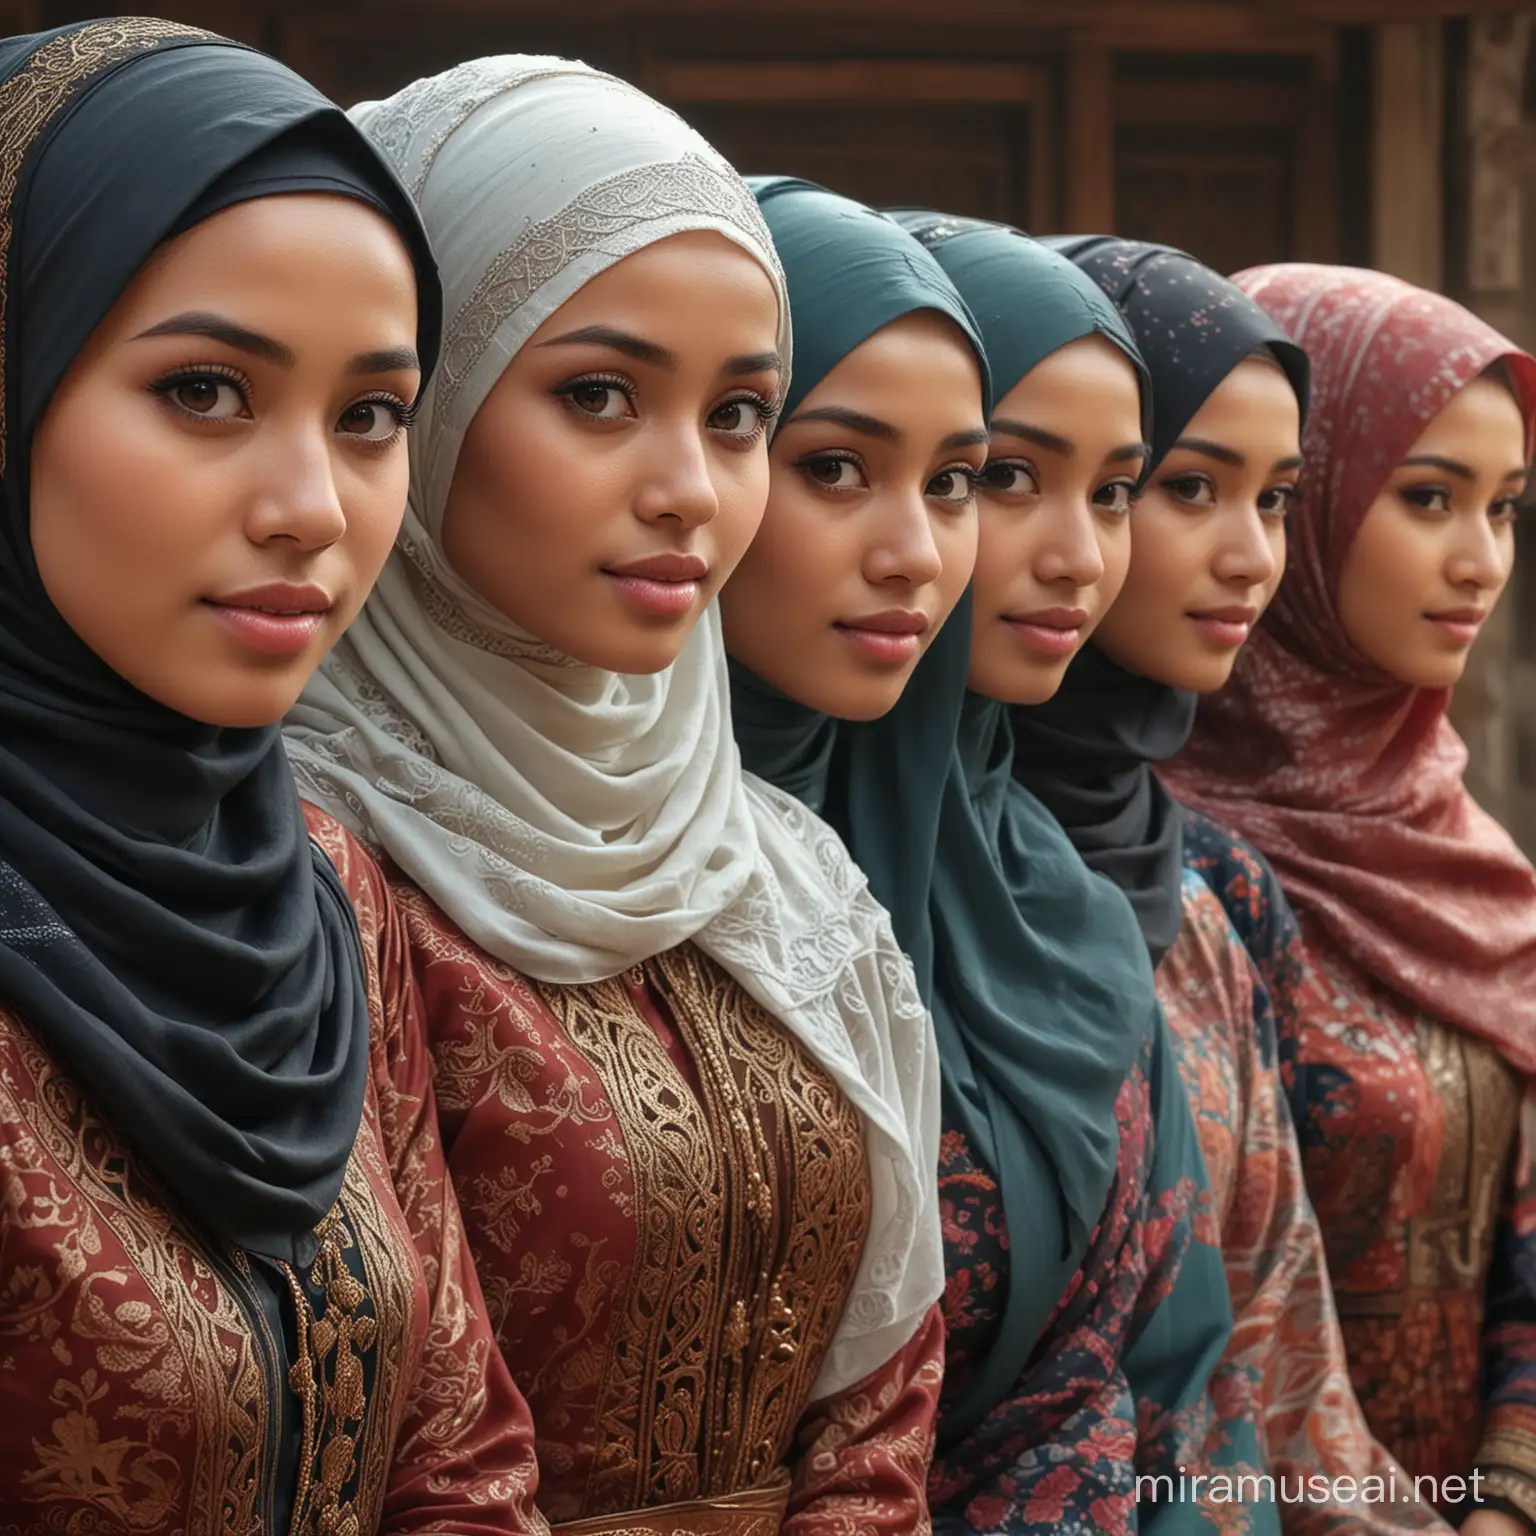 Traditional Indonesian Women Wearing Hijab and Kebaya in Java